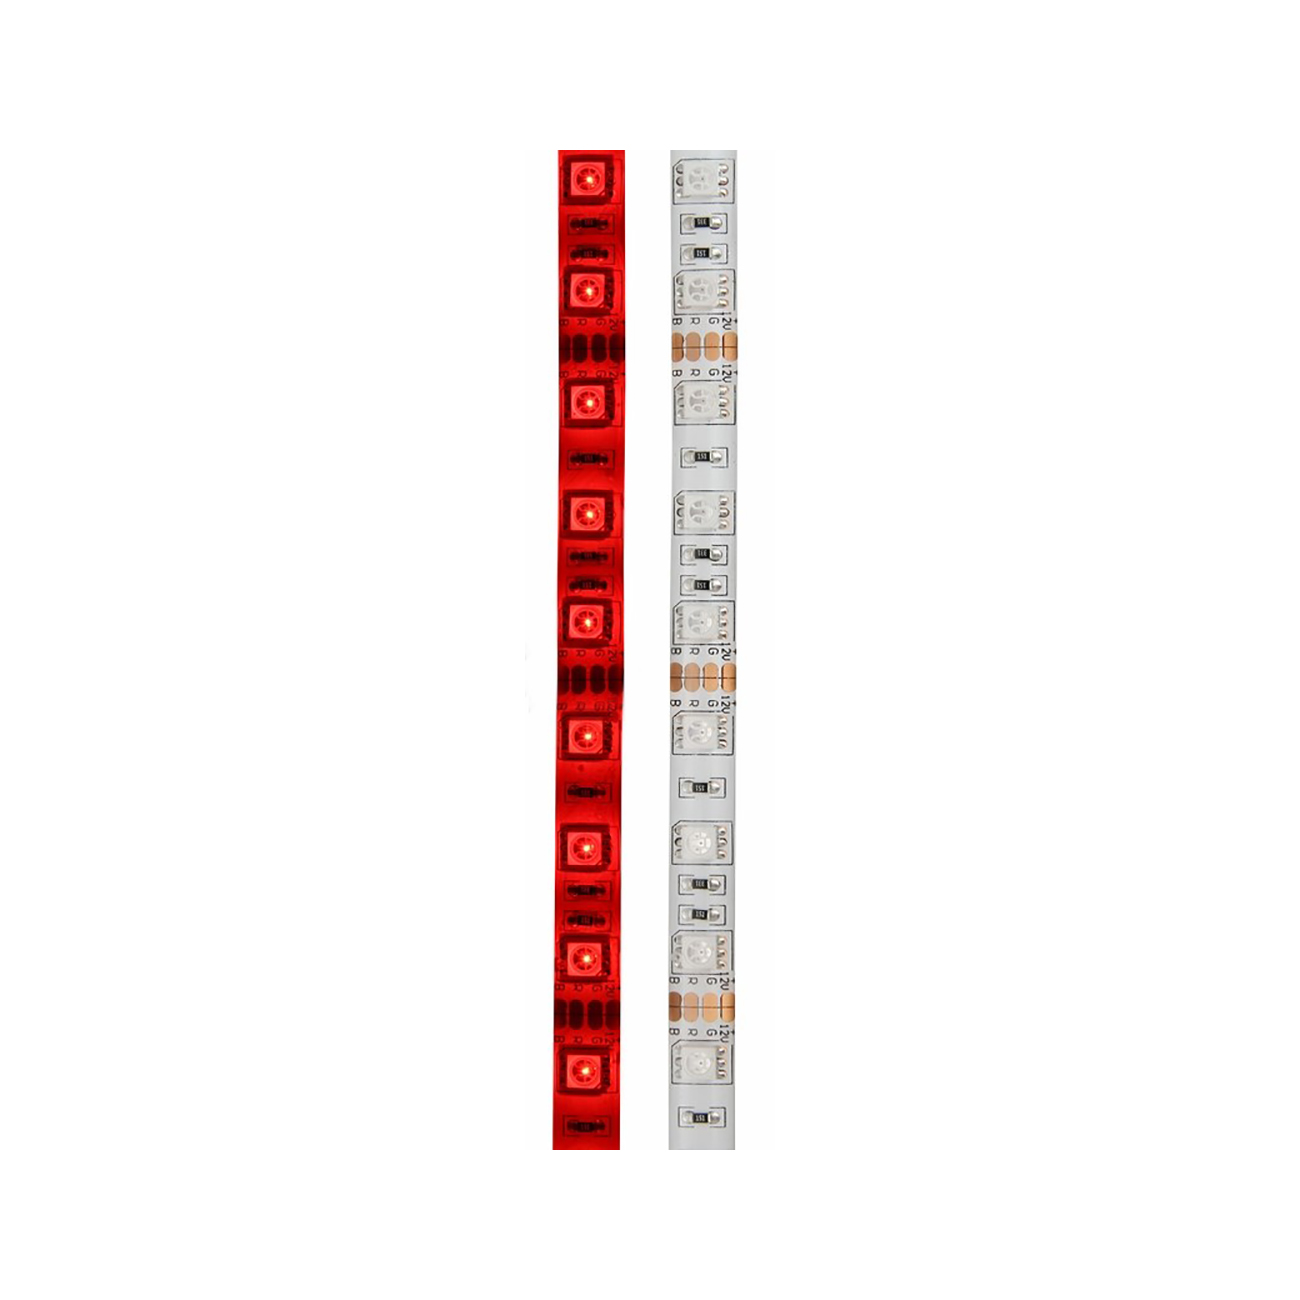 Фото Светодиодная лента 10 мм, красный, SMD 5050, 60 LED/м, 12 В, Lamper {141-491}